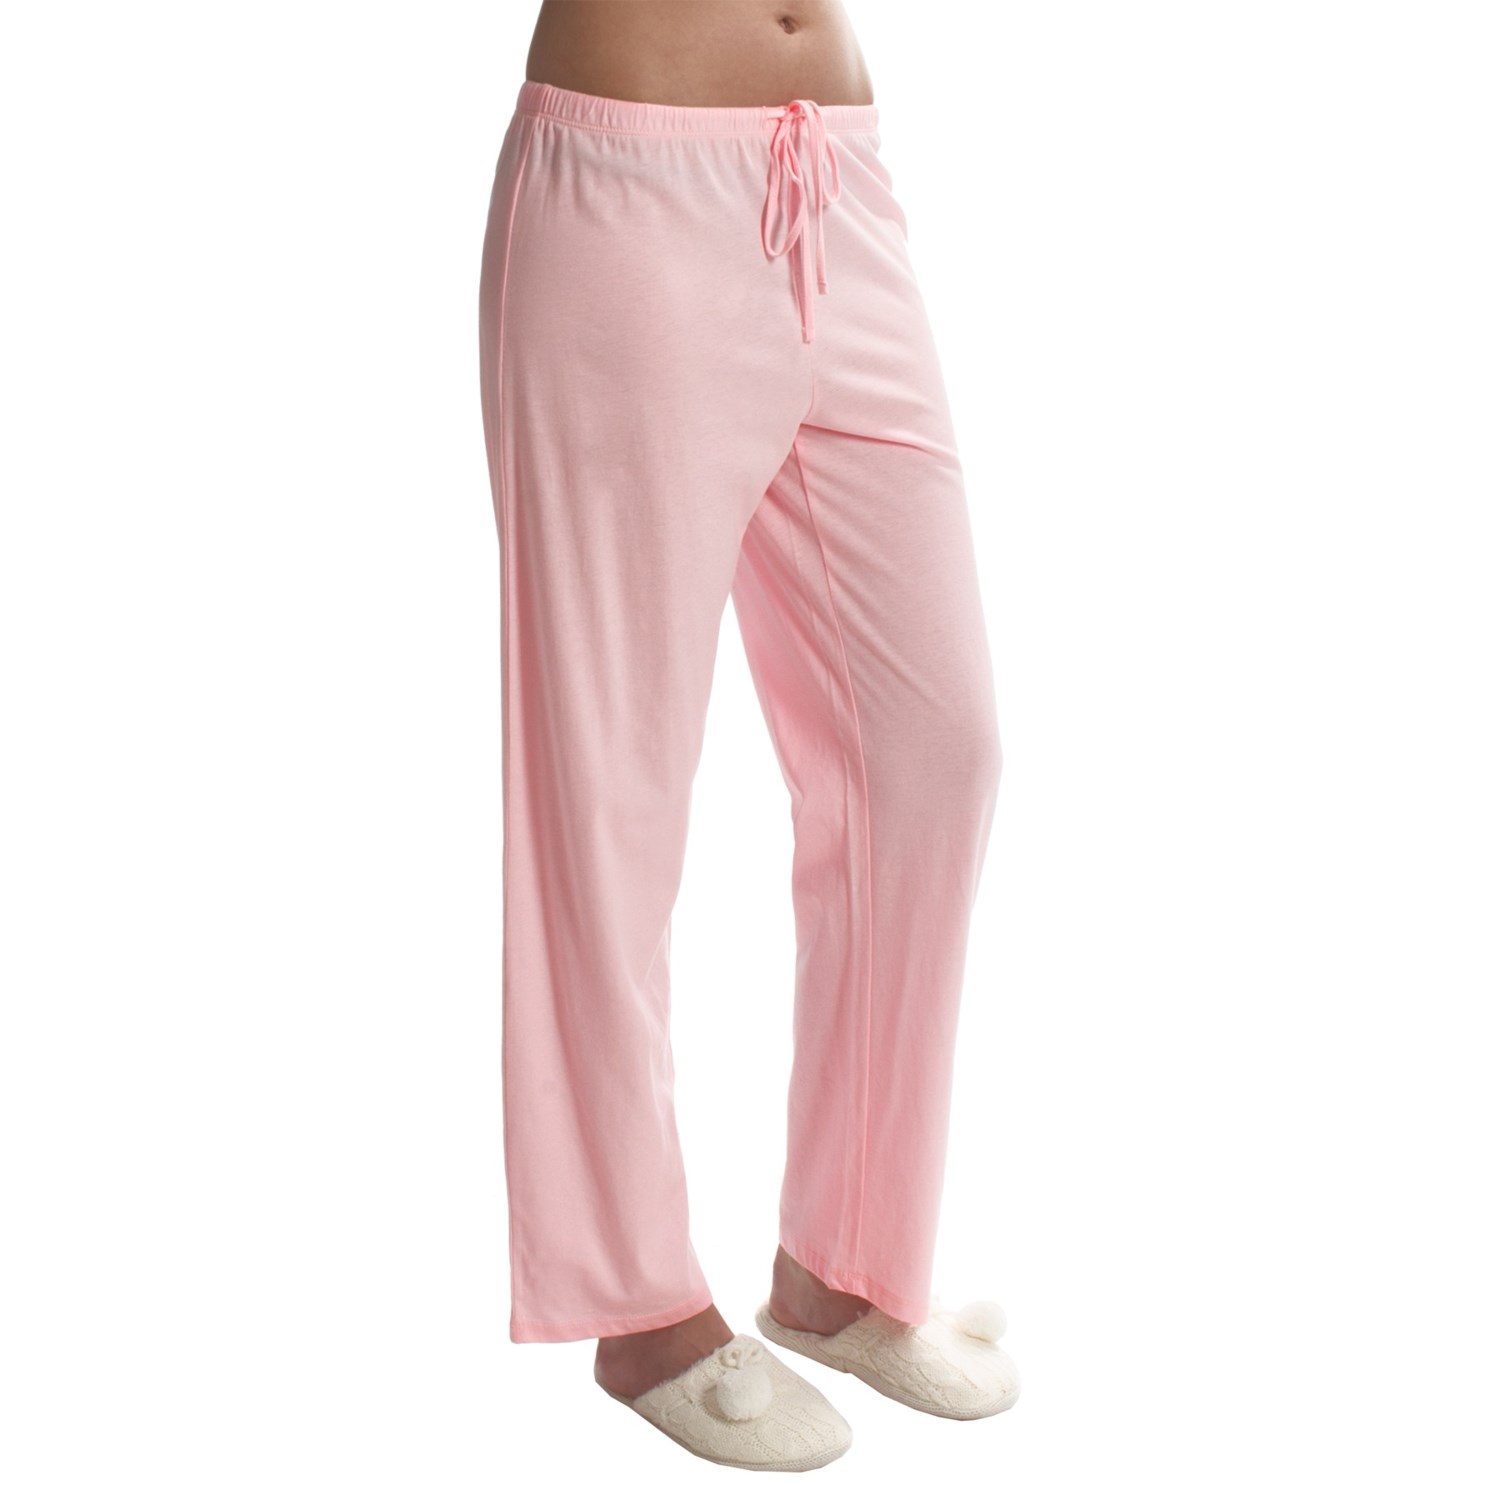 Jockey Jersey Knit Lounge Pants (For Women) - Save 56%